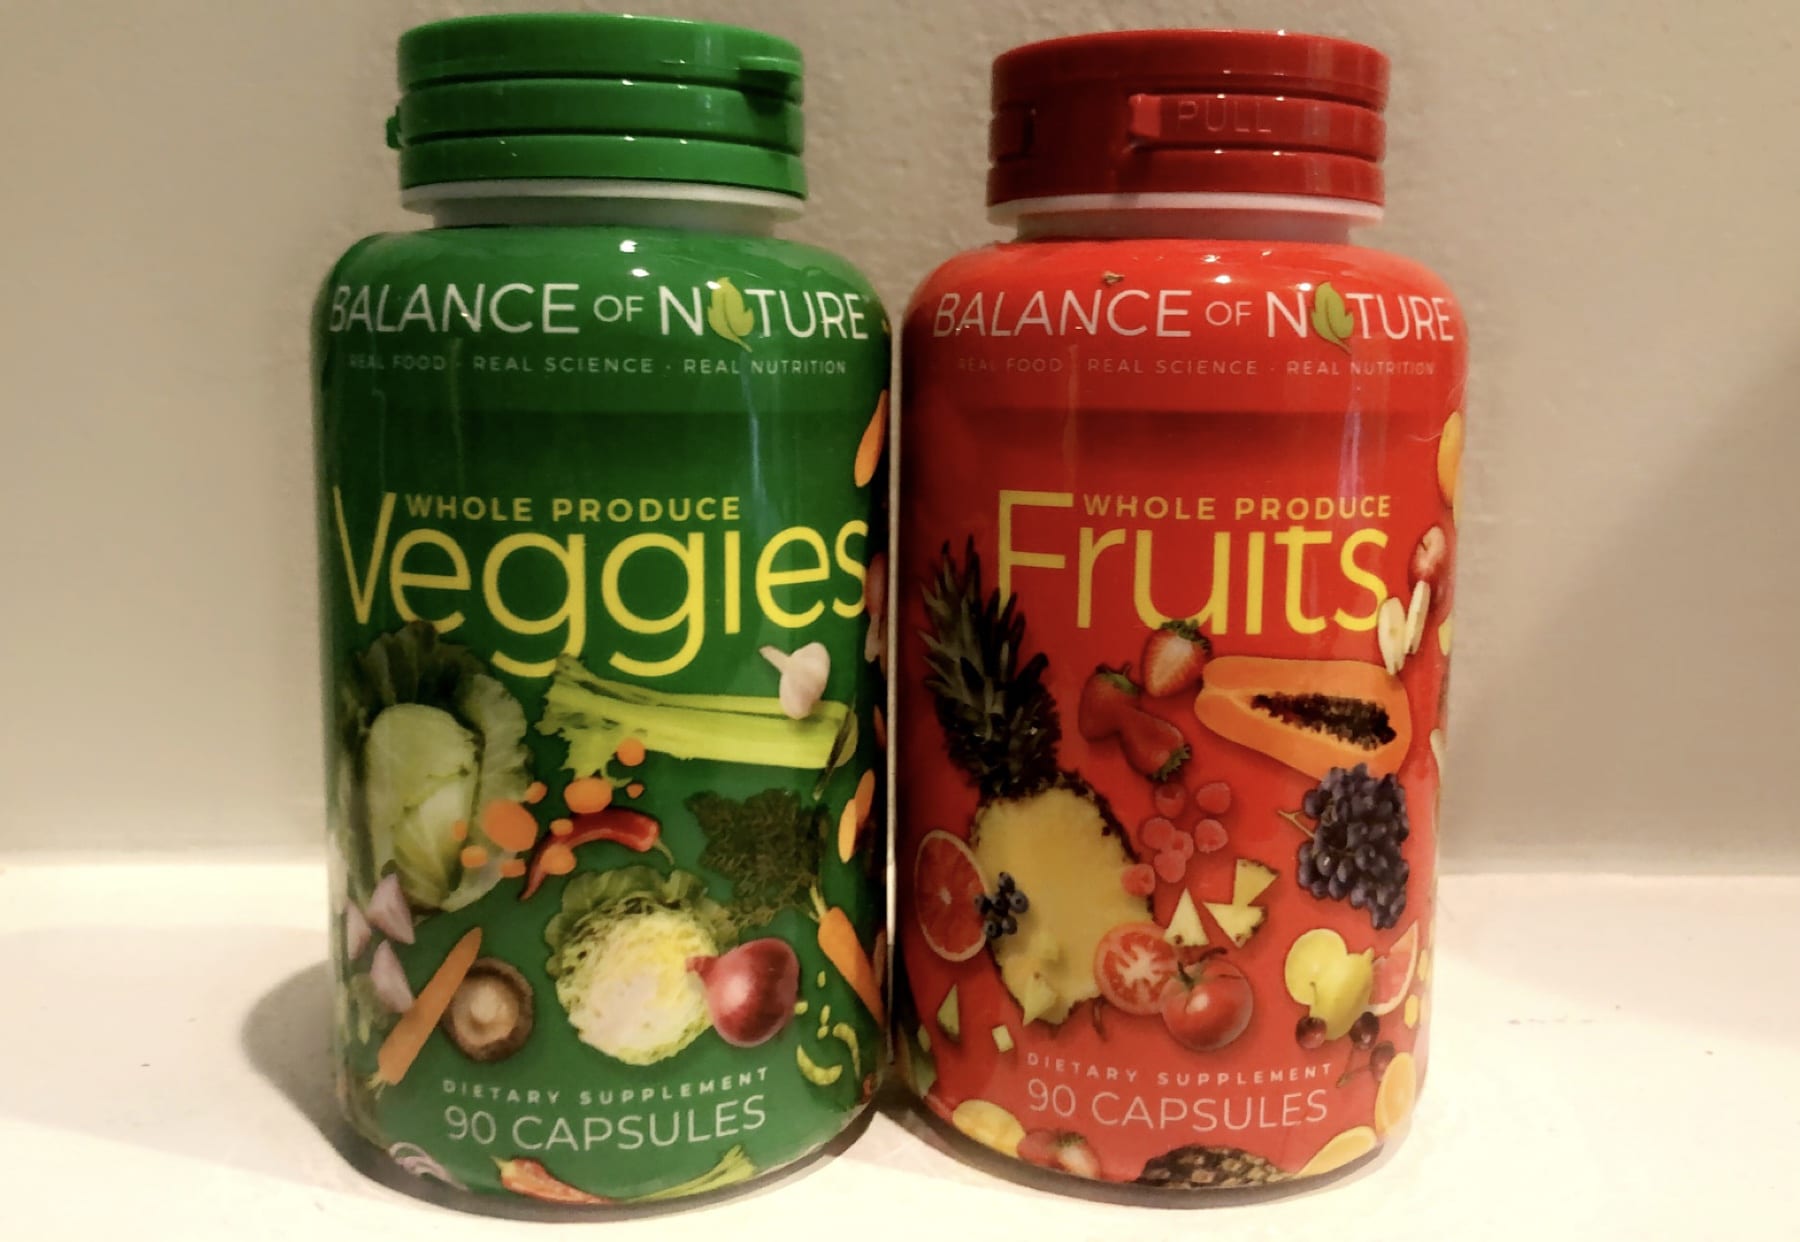 Balance of nature fruits and veggies bottles